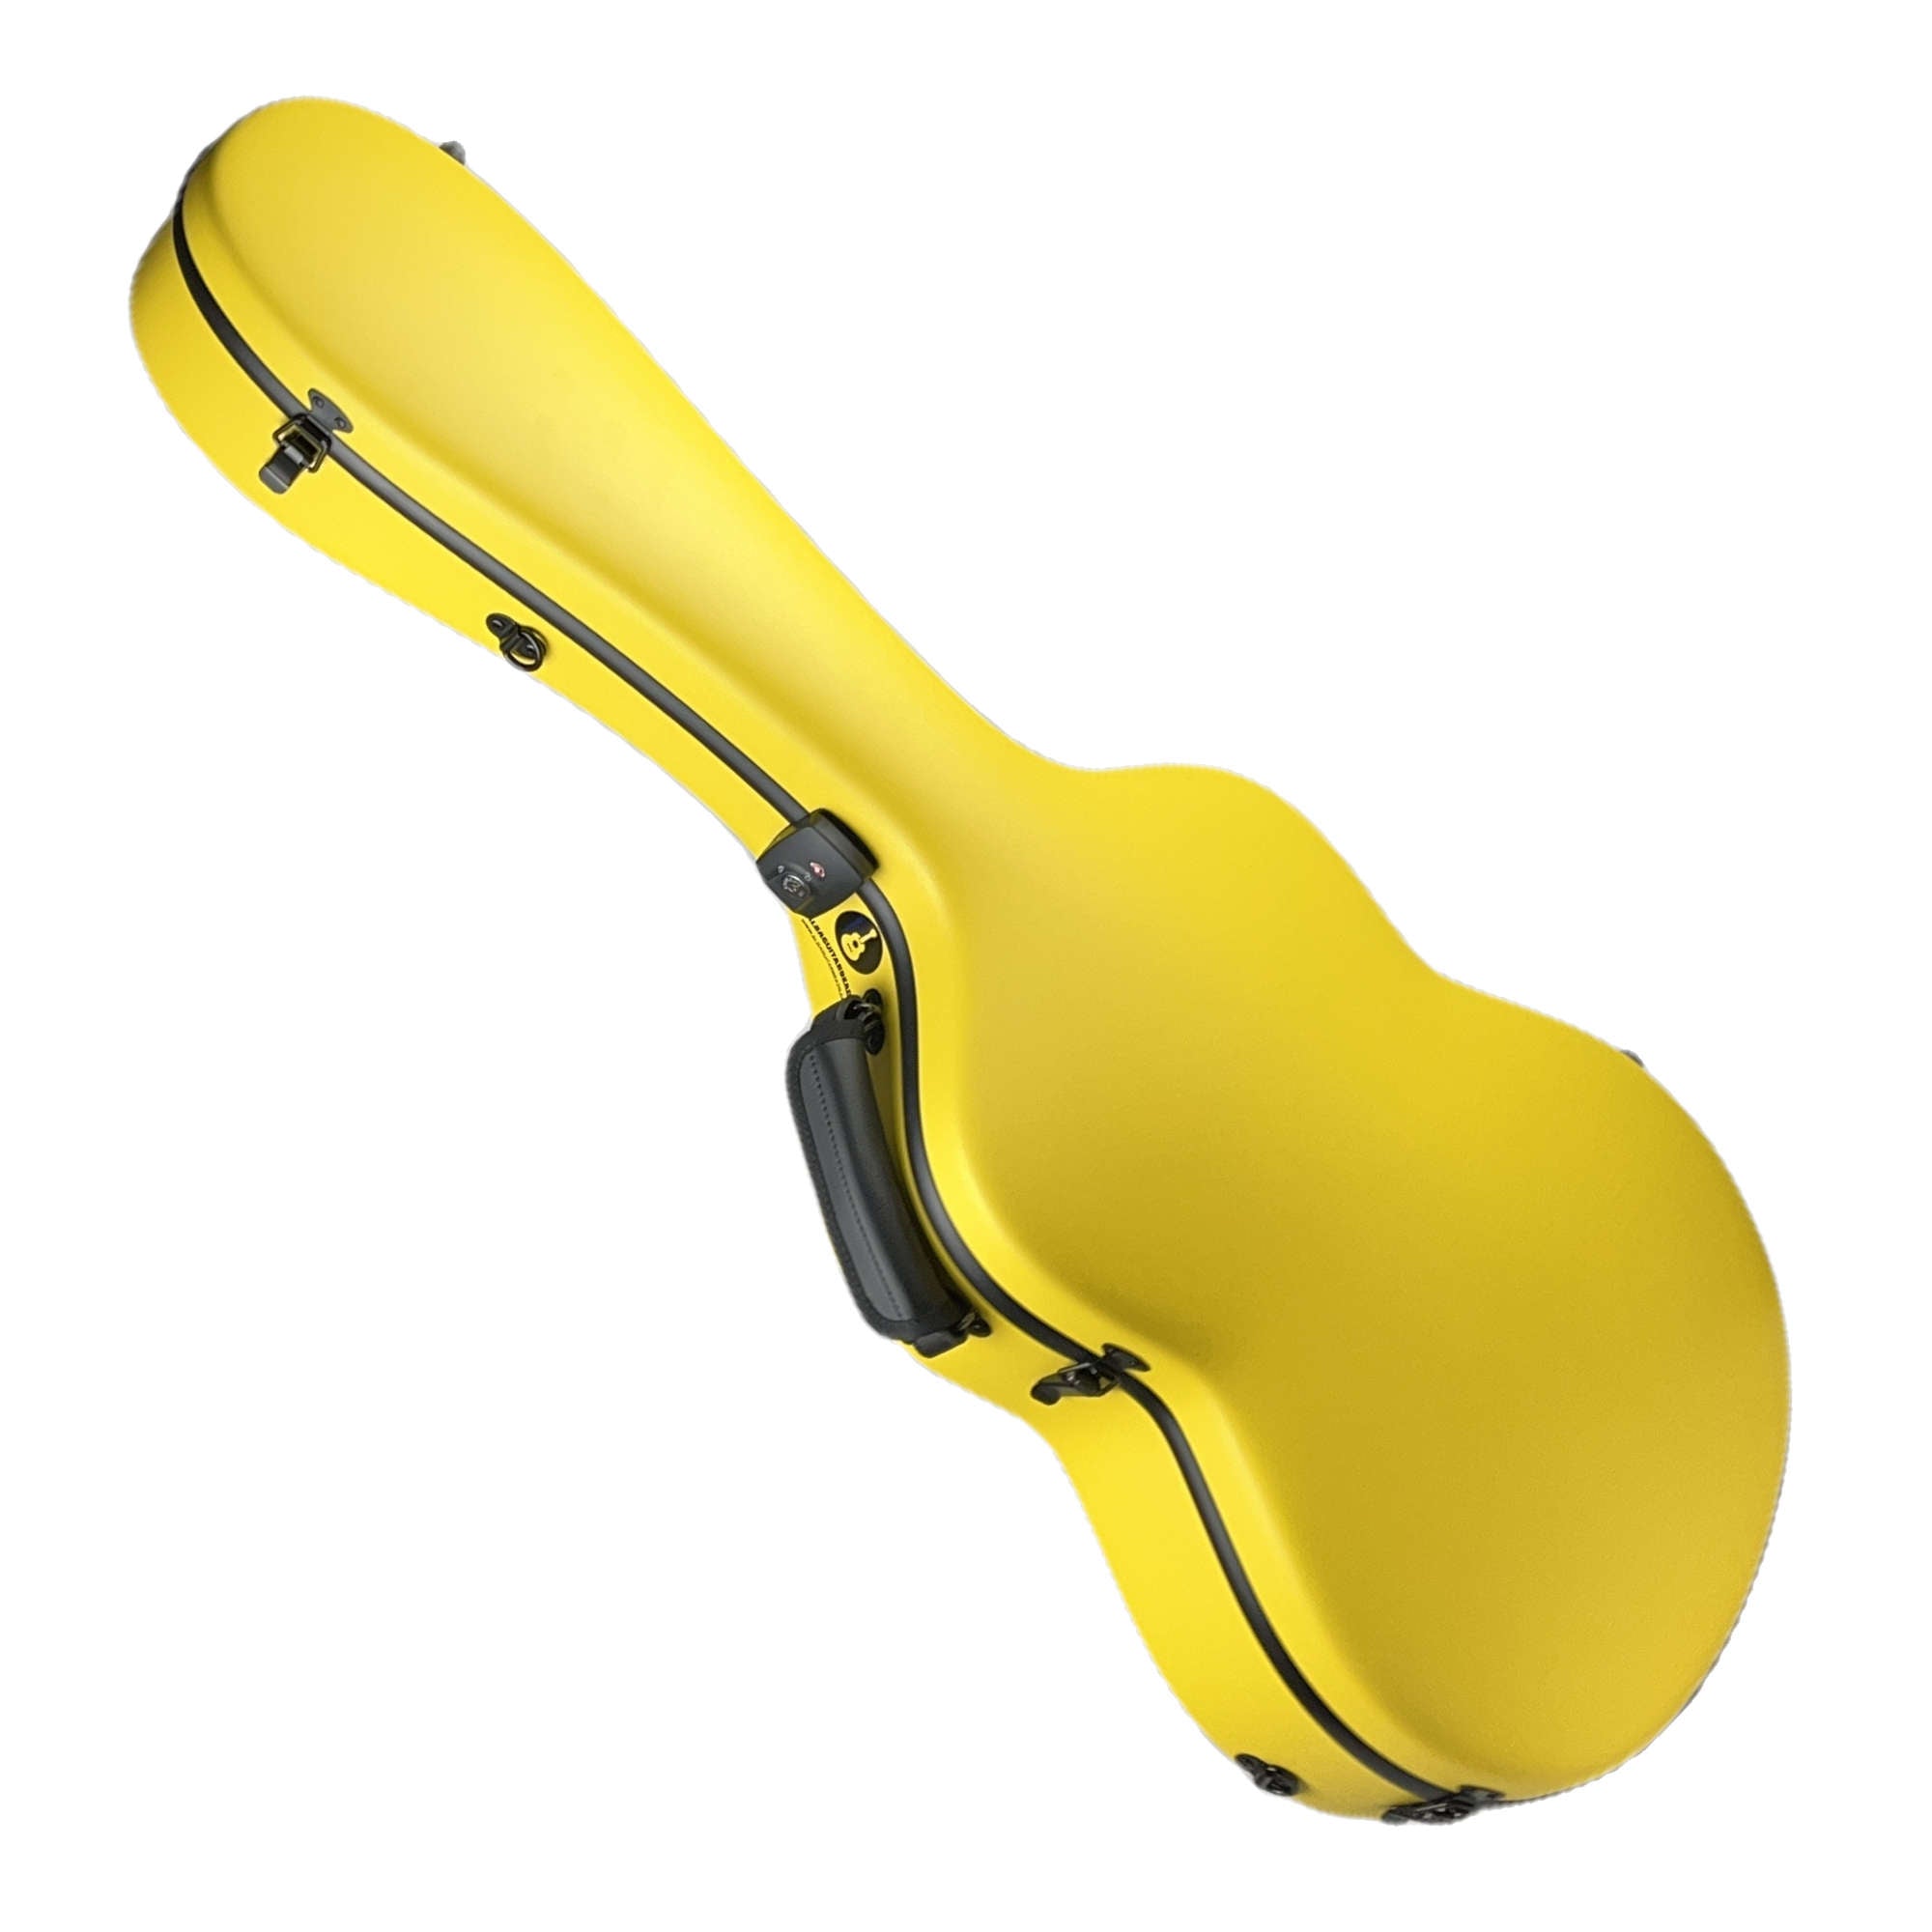 Carbon Alba Guitar Case Yellow Matte for Classical Guitar Acoustic, Flamenco guitar case